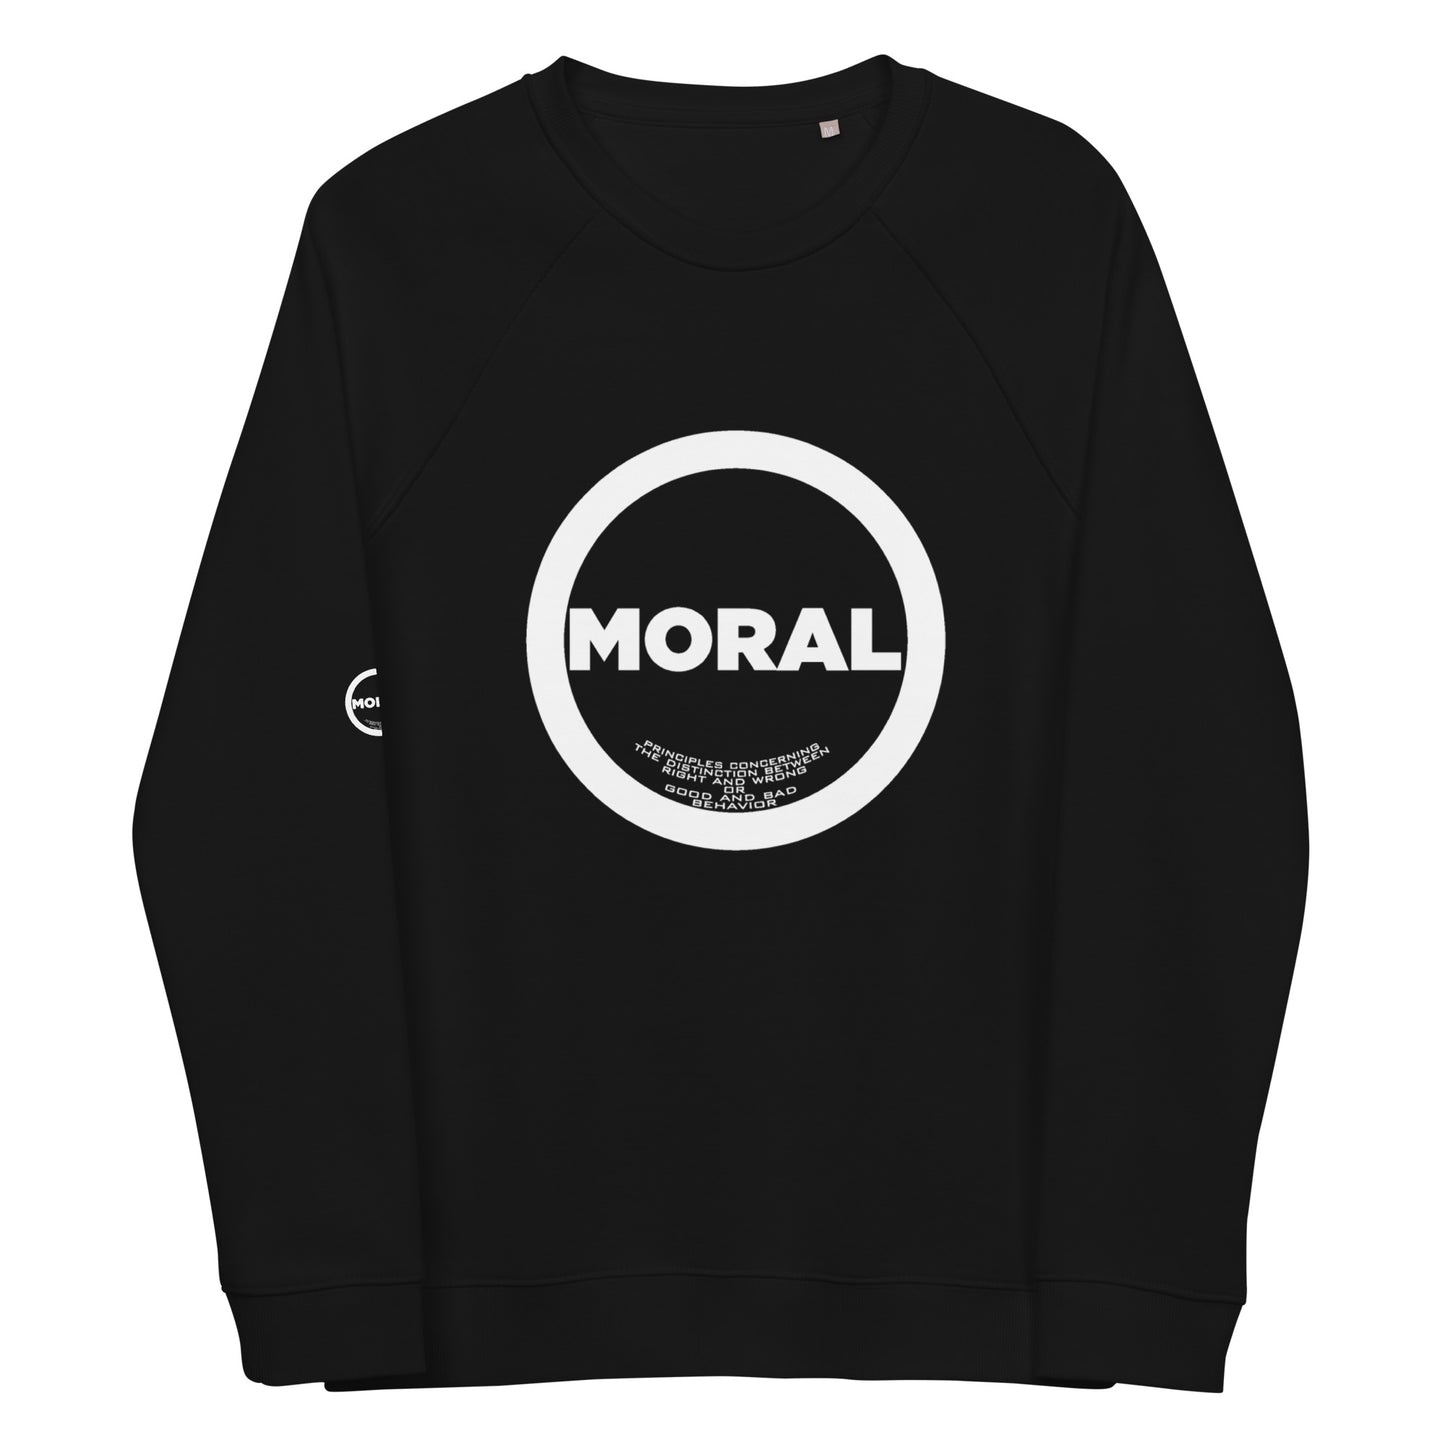 Moral - Unisex organic raglan sweatshirt